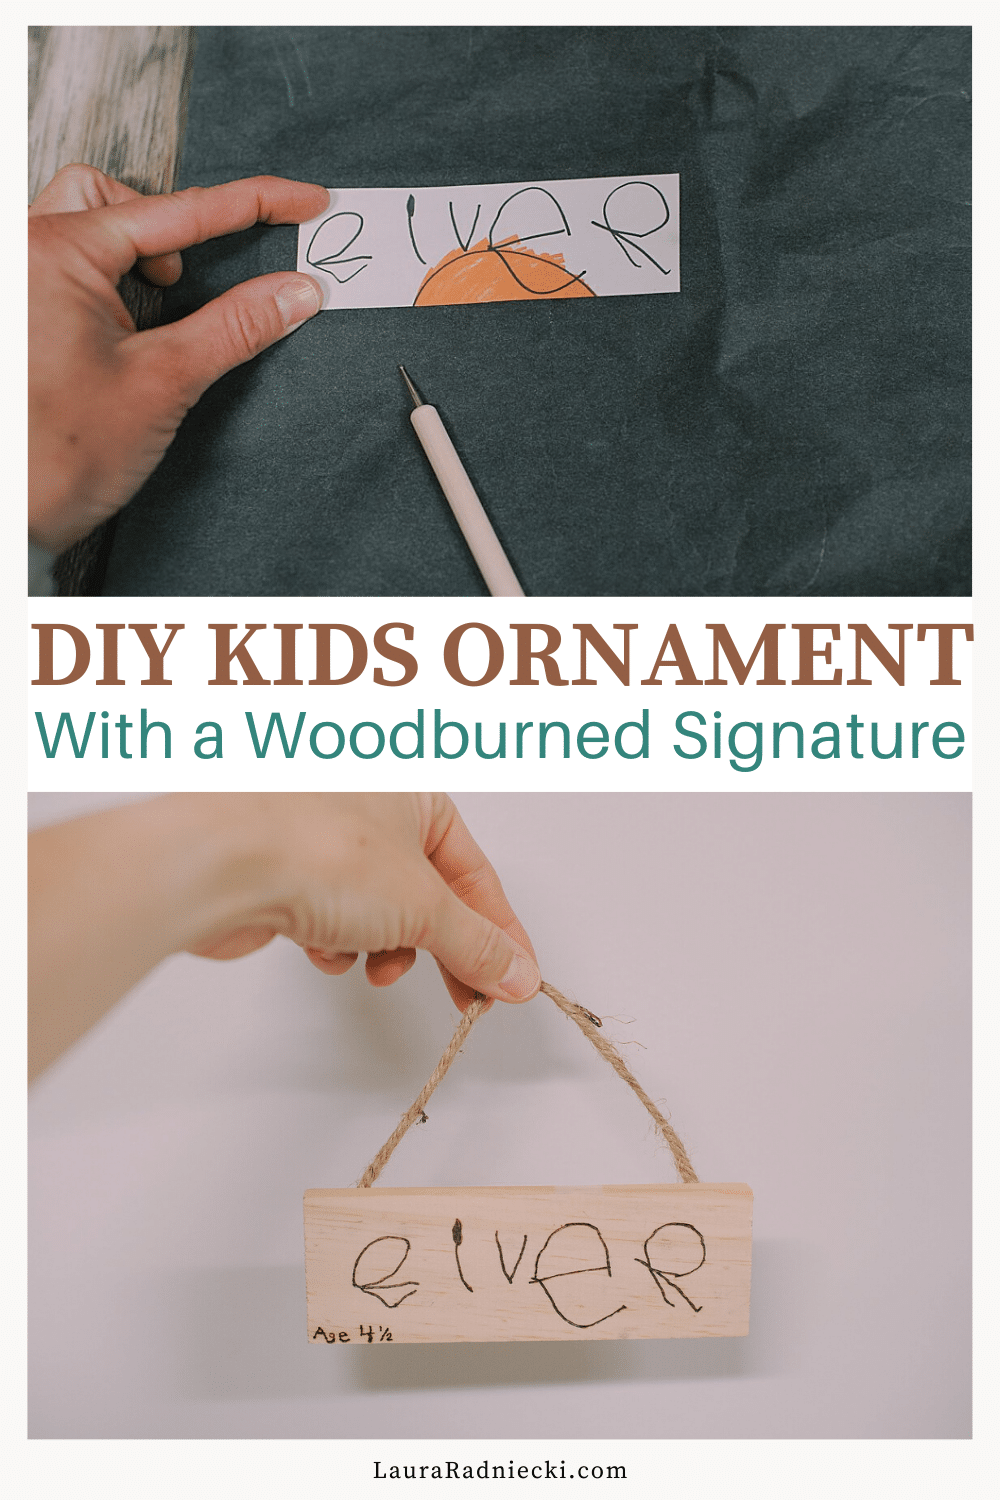 How to Make a Woodburned Kids\' Handwriting Ornament